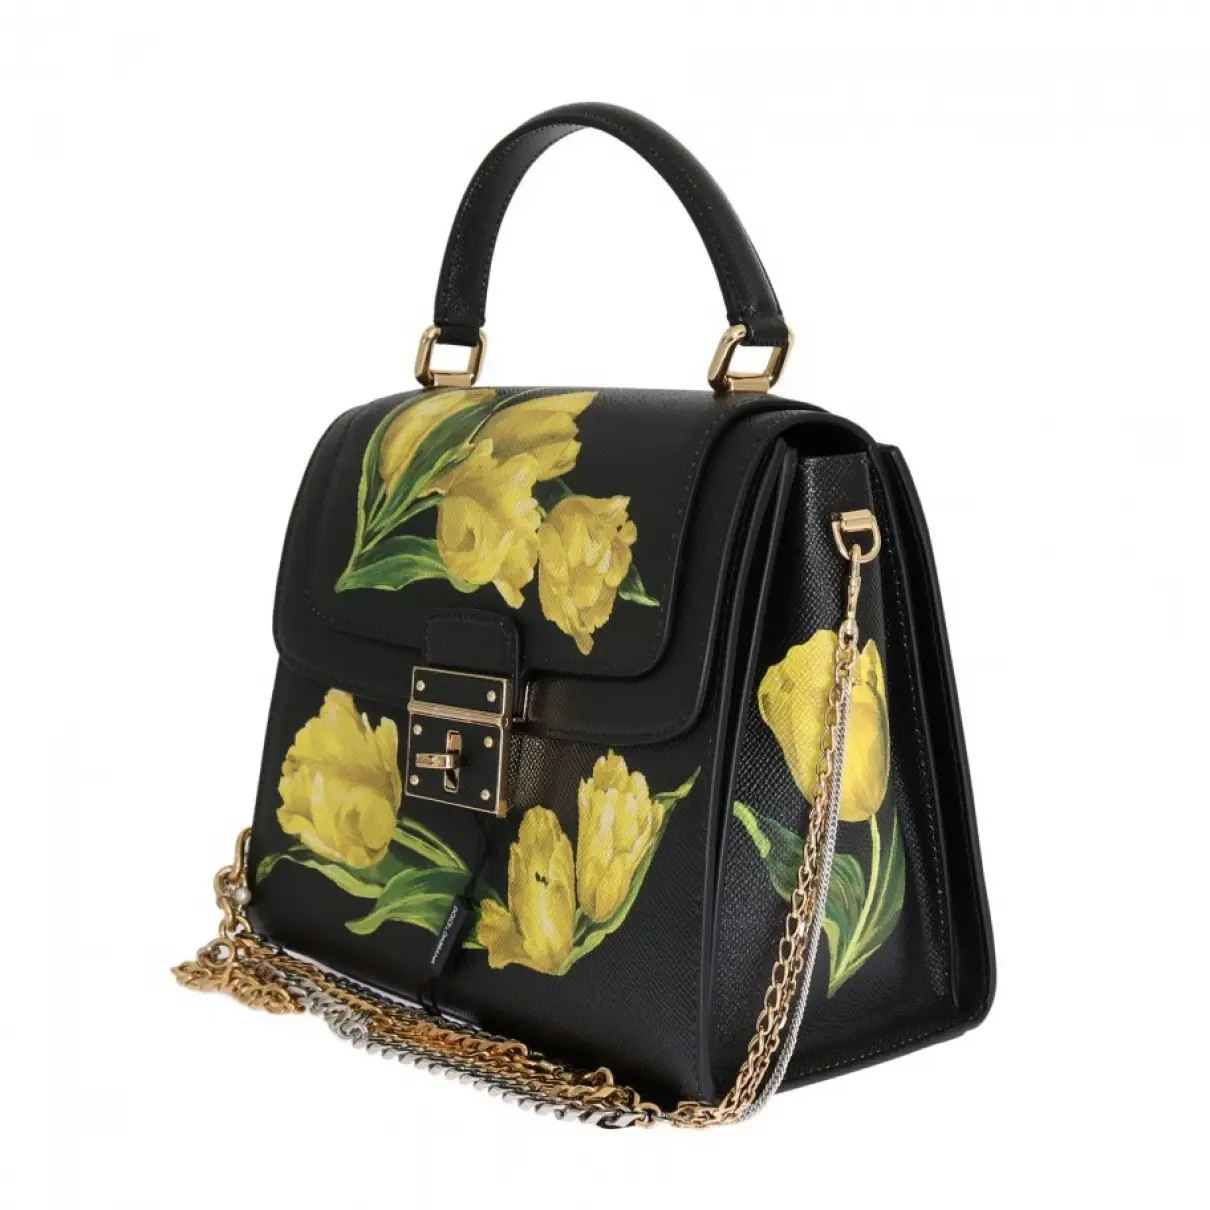 Buy Dolce & Gabbana Lucia leather handbag online